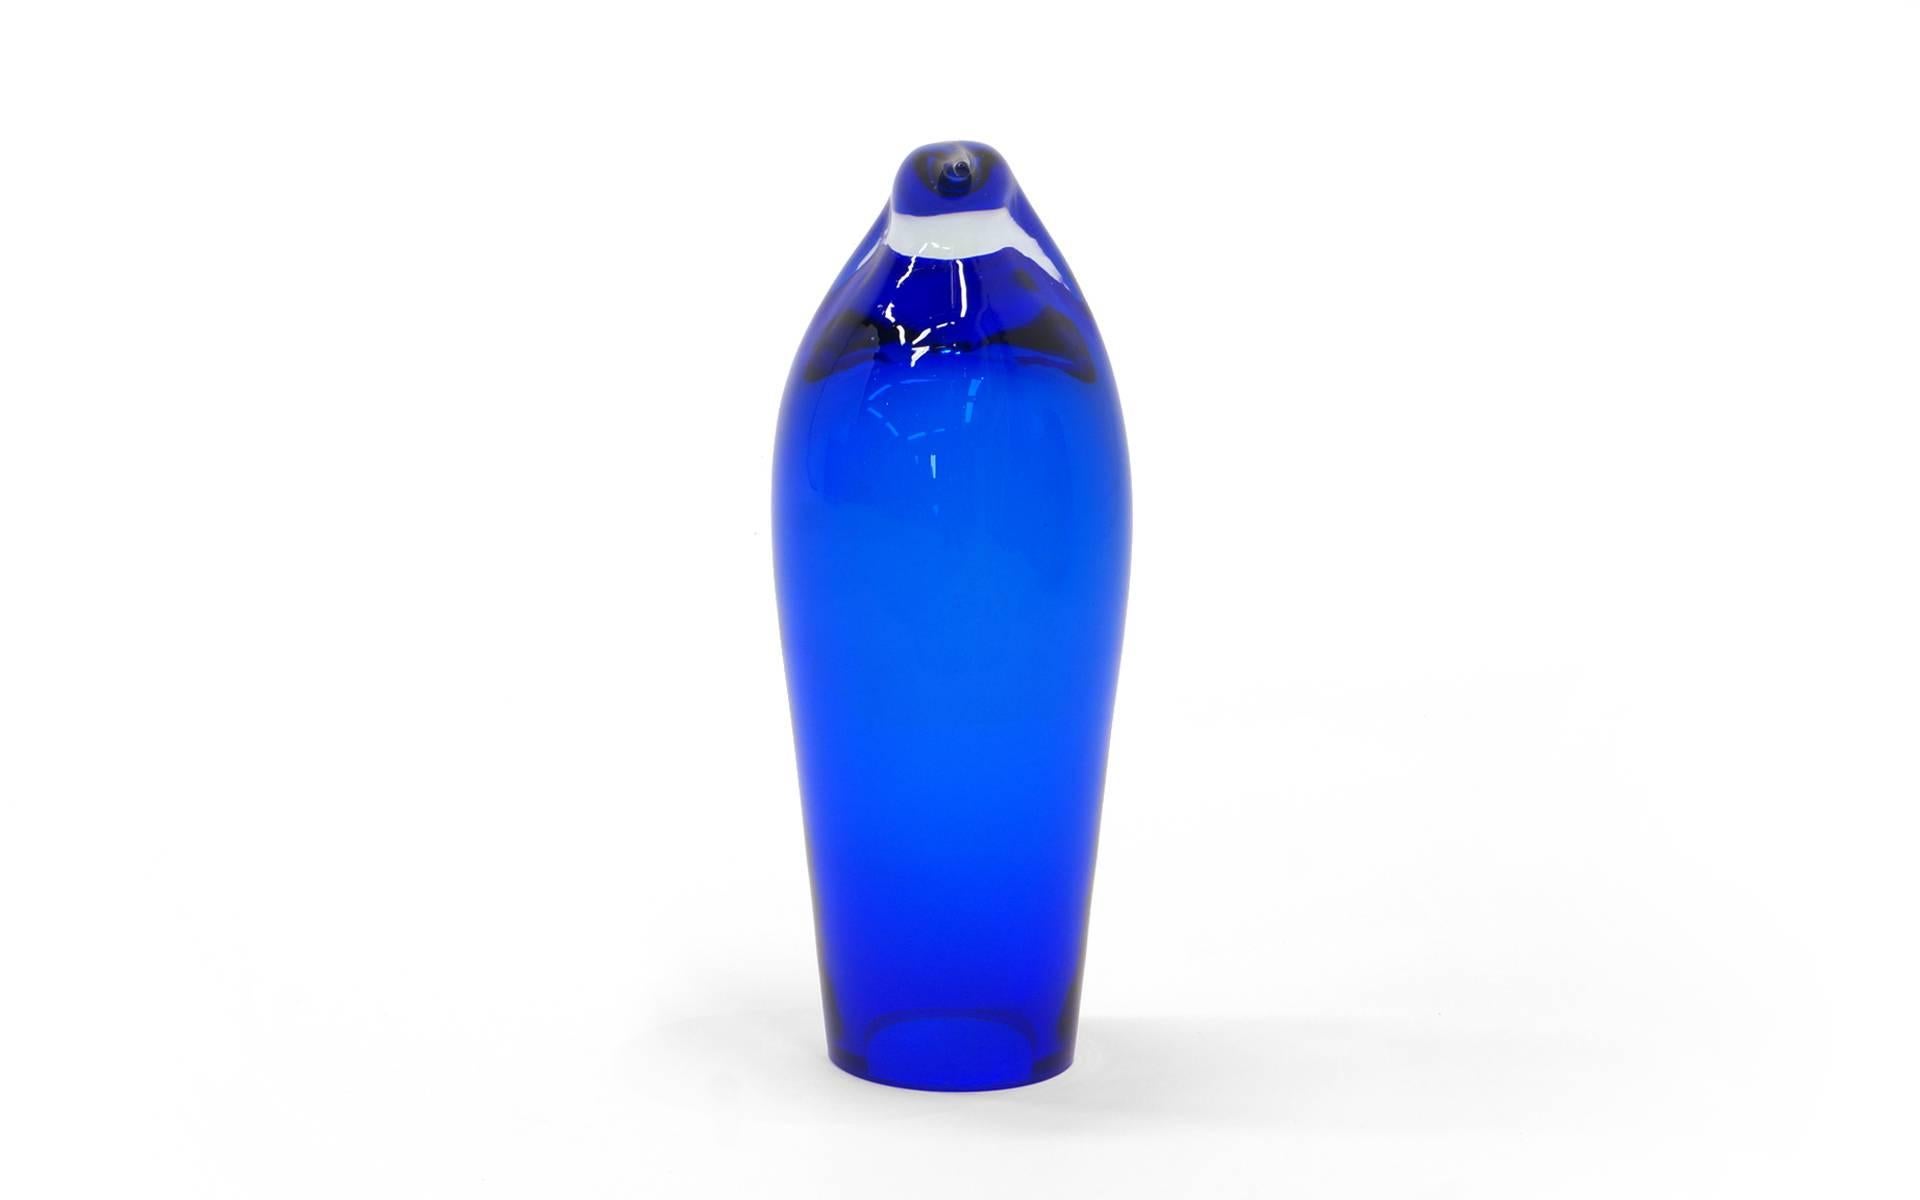 Beautiful blue art glass modern penguin sculpture. No chips or repairs. Made by Blenko. Quick shipping.